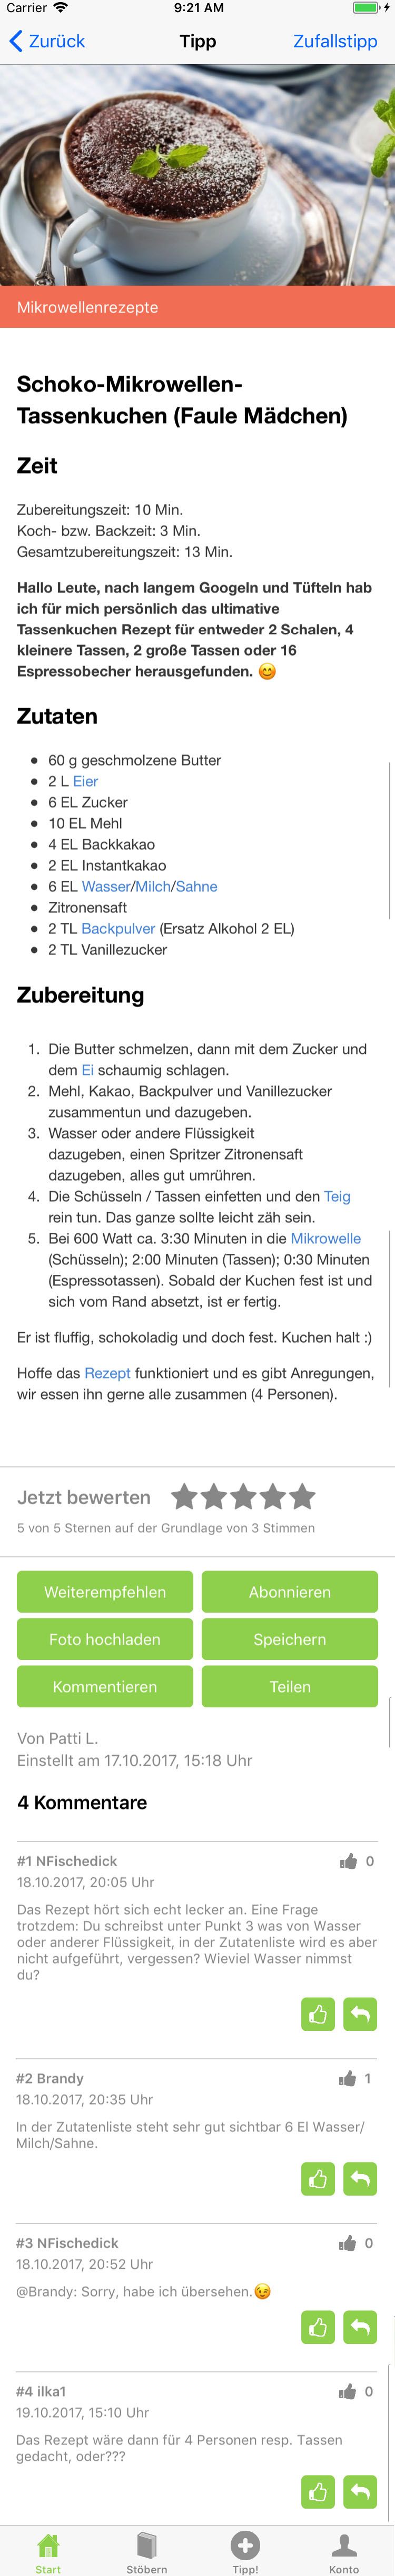 iPhone App Softwareentwicklung Ulm 7